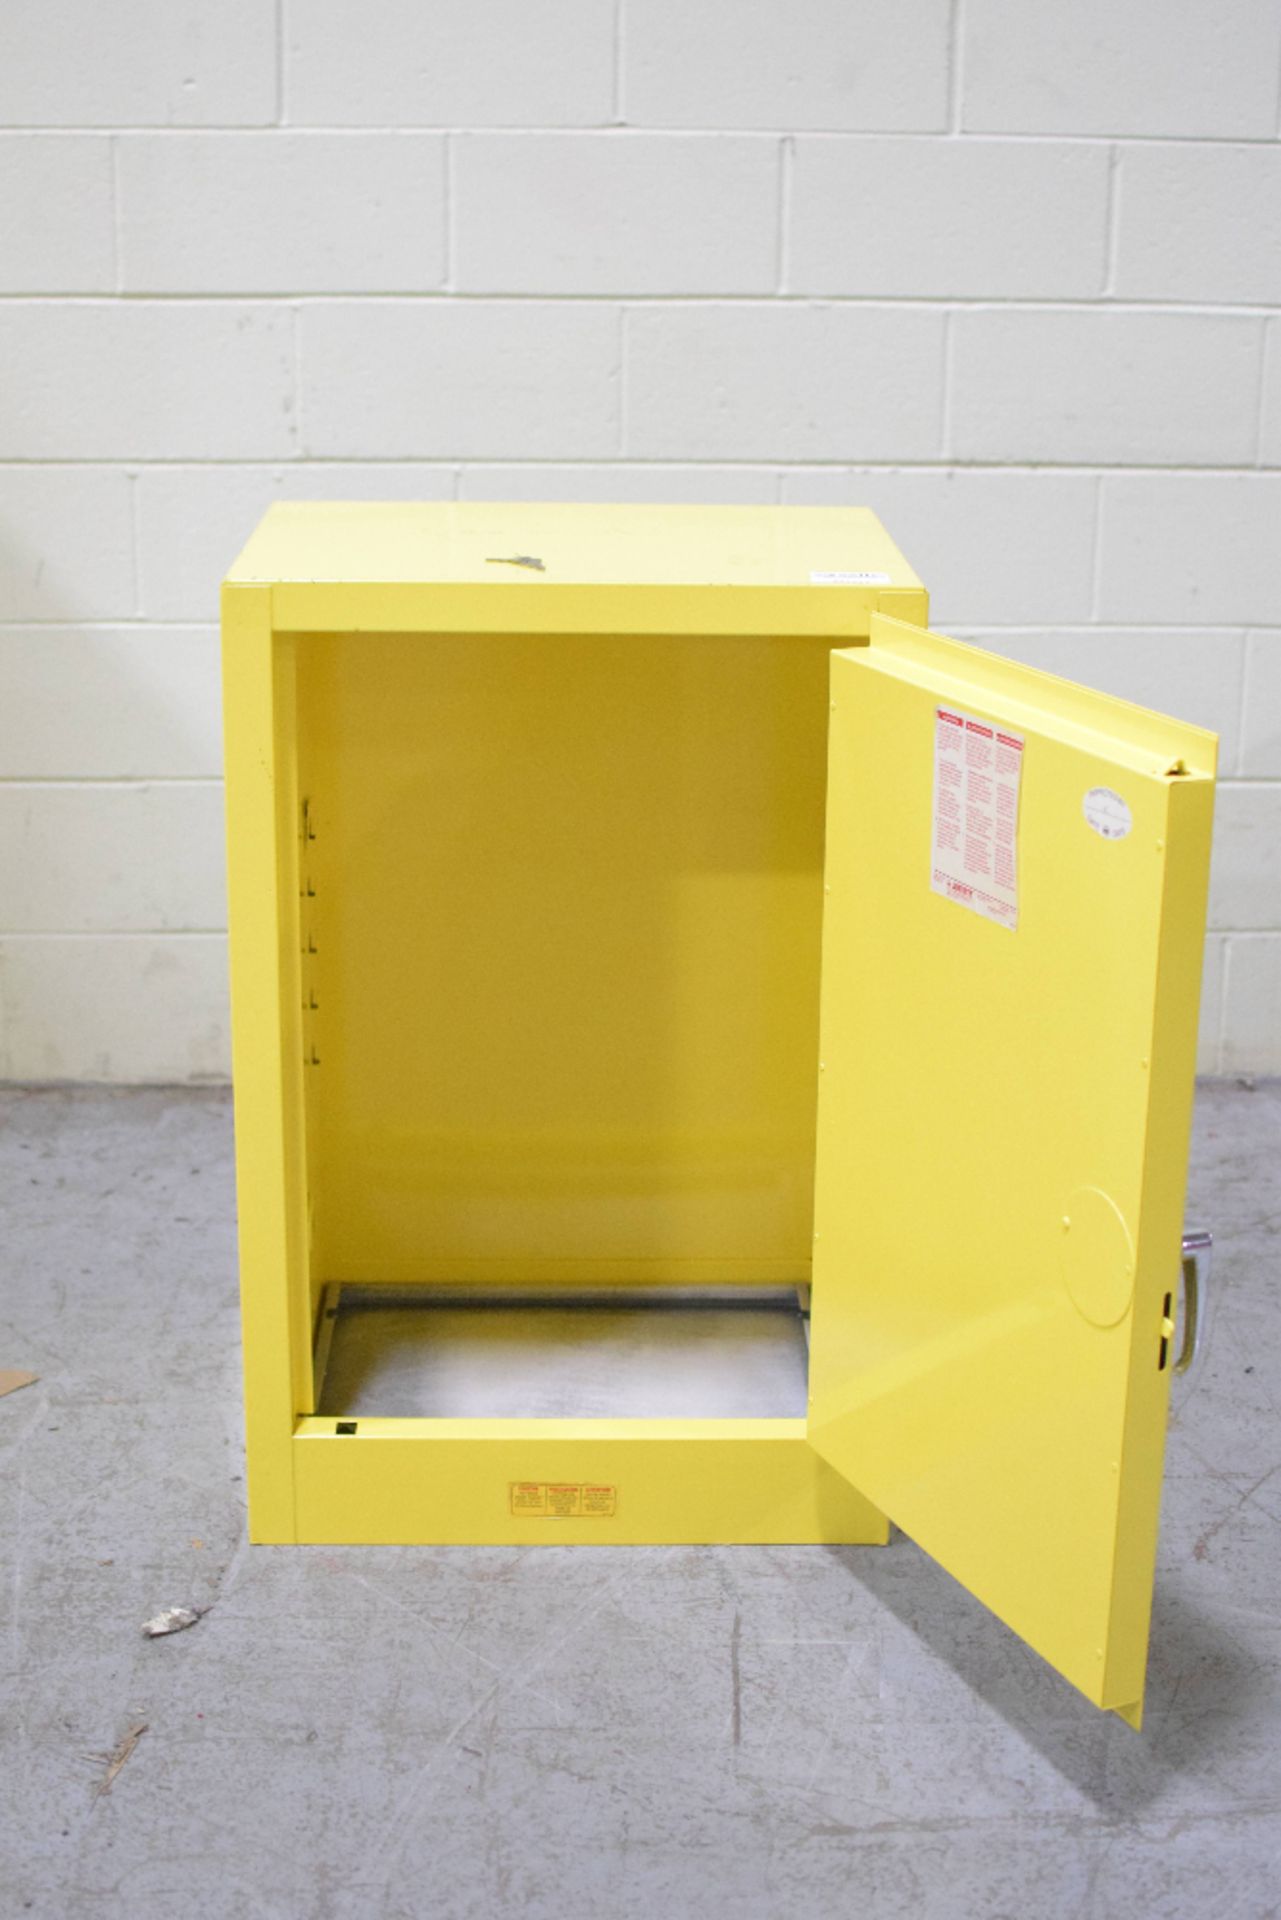 Justrite Flammable Liquid Storage Cabinet - Image 2 of 2